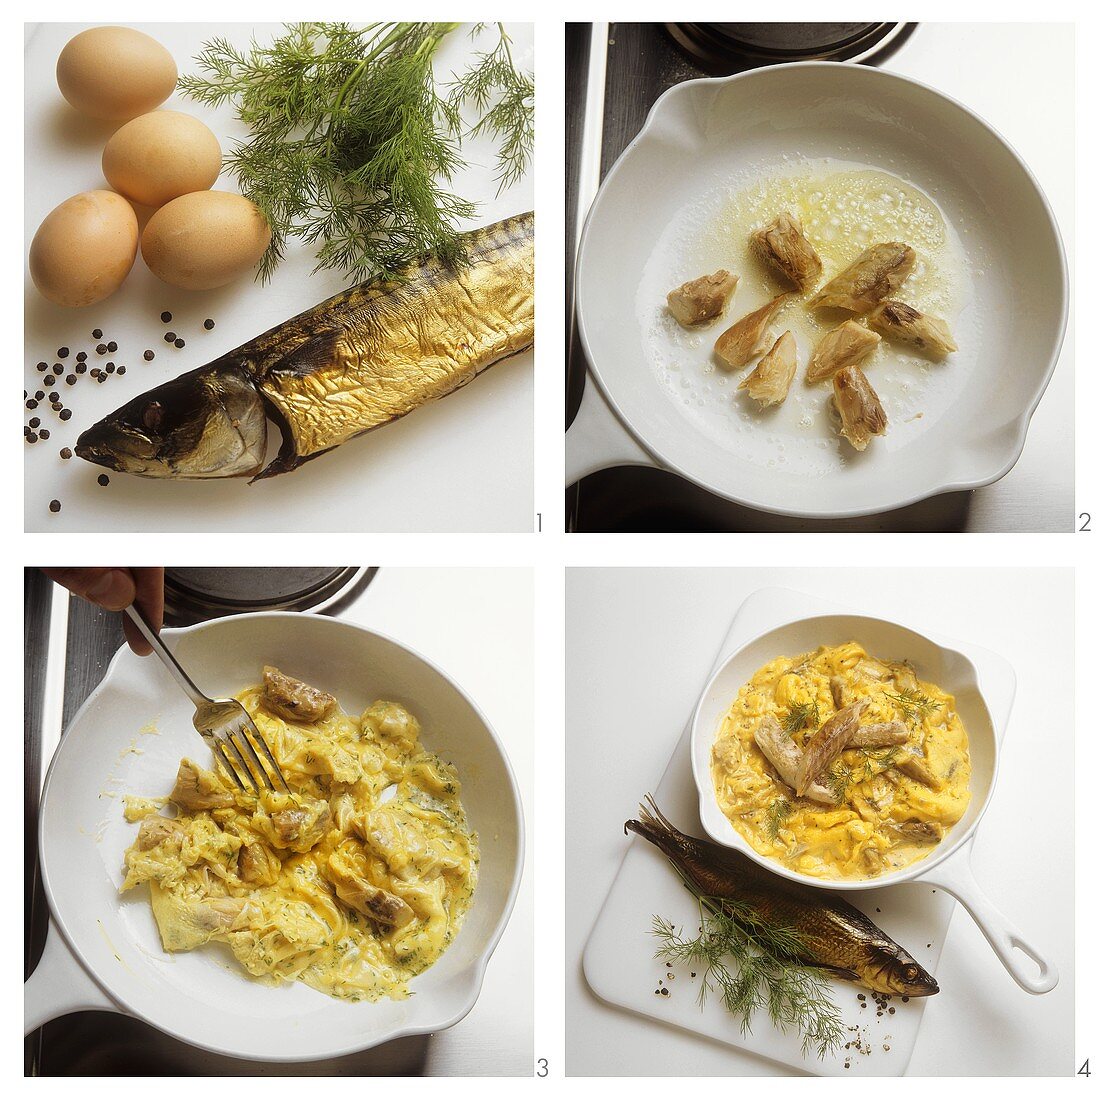 Making scrambled egg with smoked fish